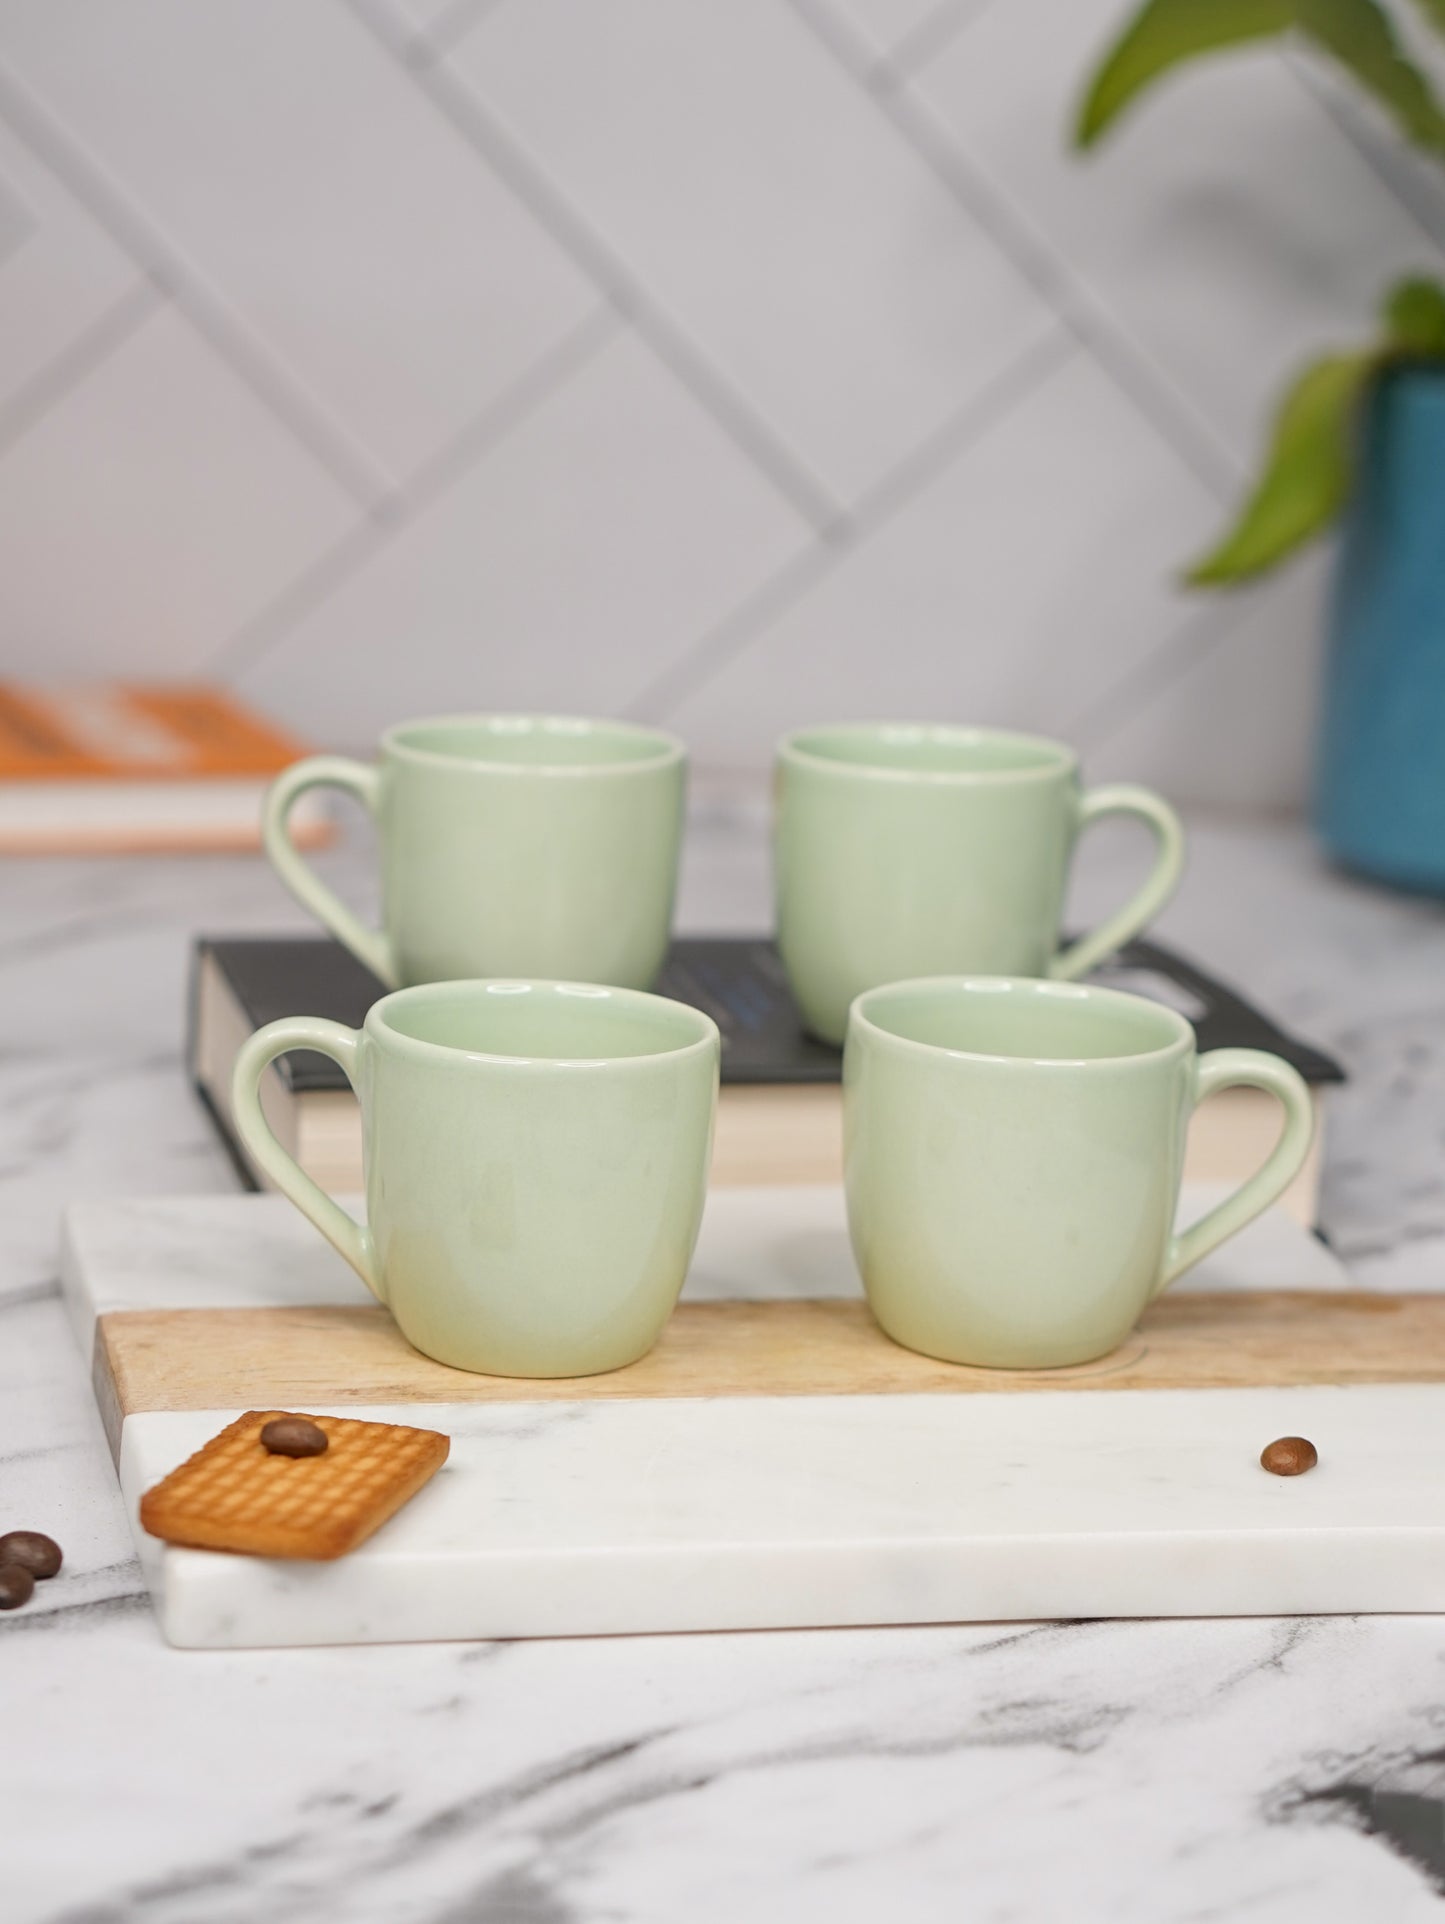 Ceramic Capicity 150ml Small Size Cups | Tea, Coffee, Milk Cup 7 cm Height X 9.5 cm Diameter (LR-CM-031)